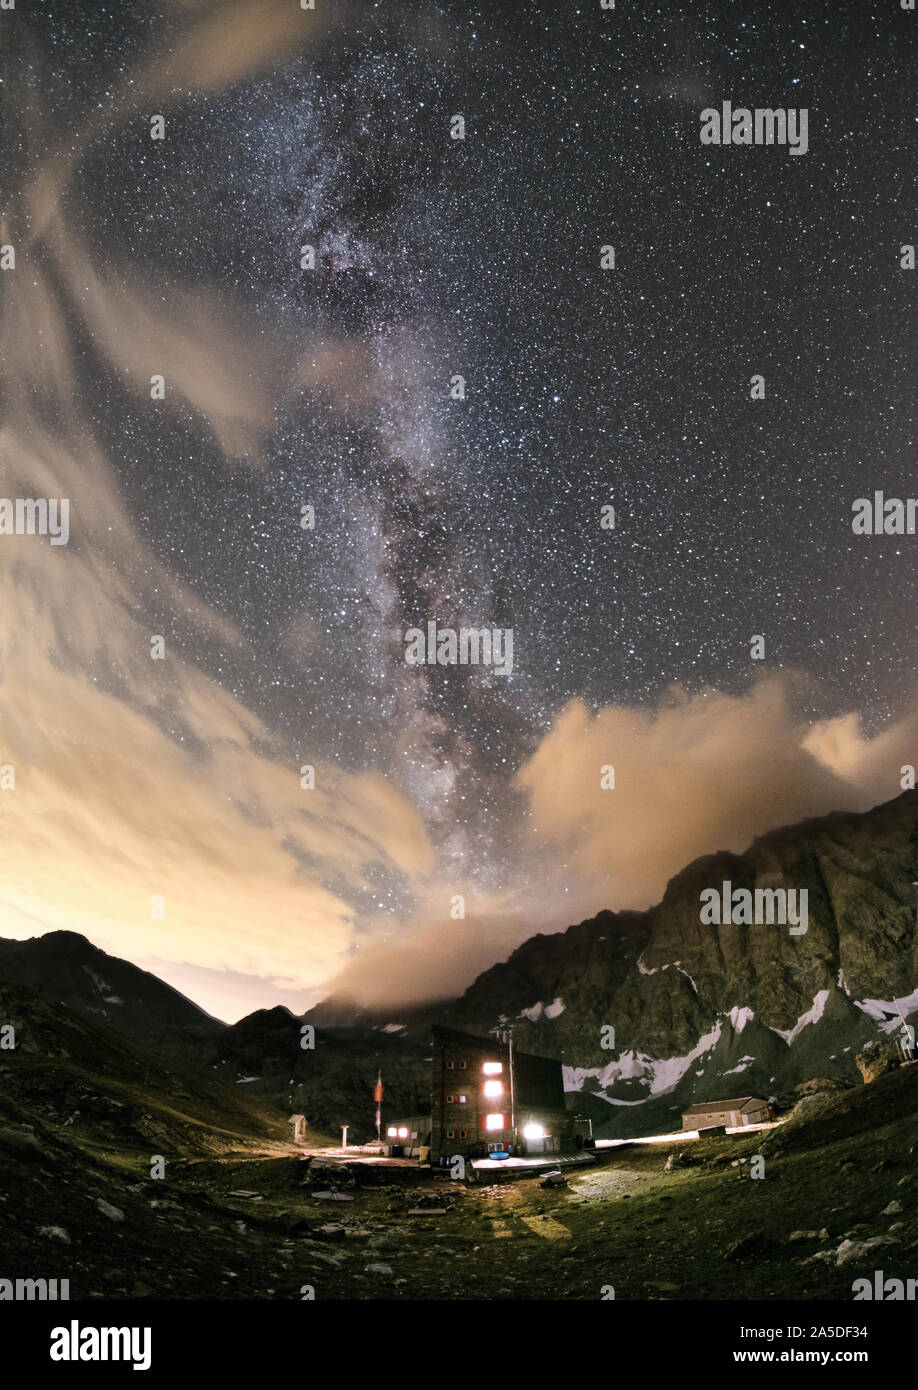 Rifugio Gastaldi, Balme, Valli di Lanzo, Torino, Italy during the night with the milky way as background Stock Photo